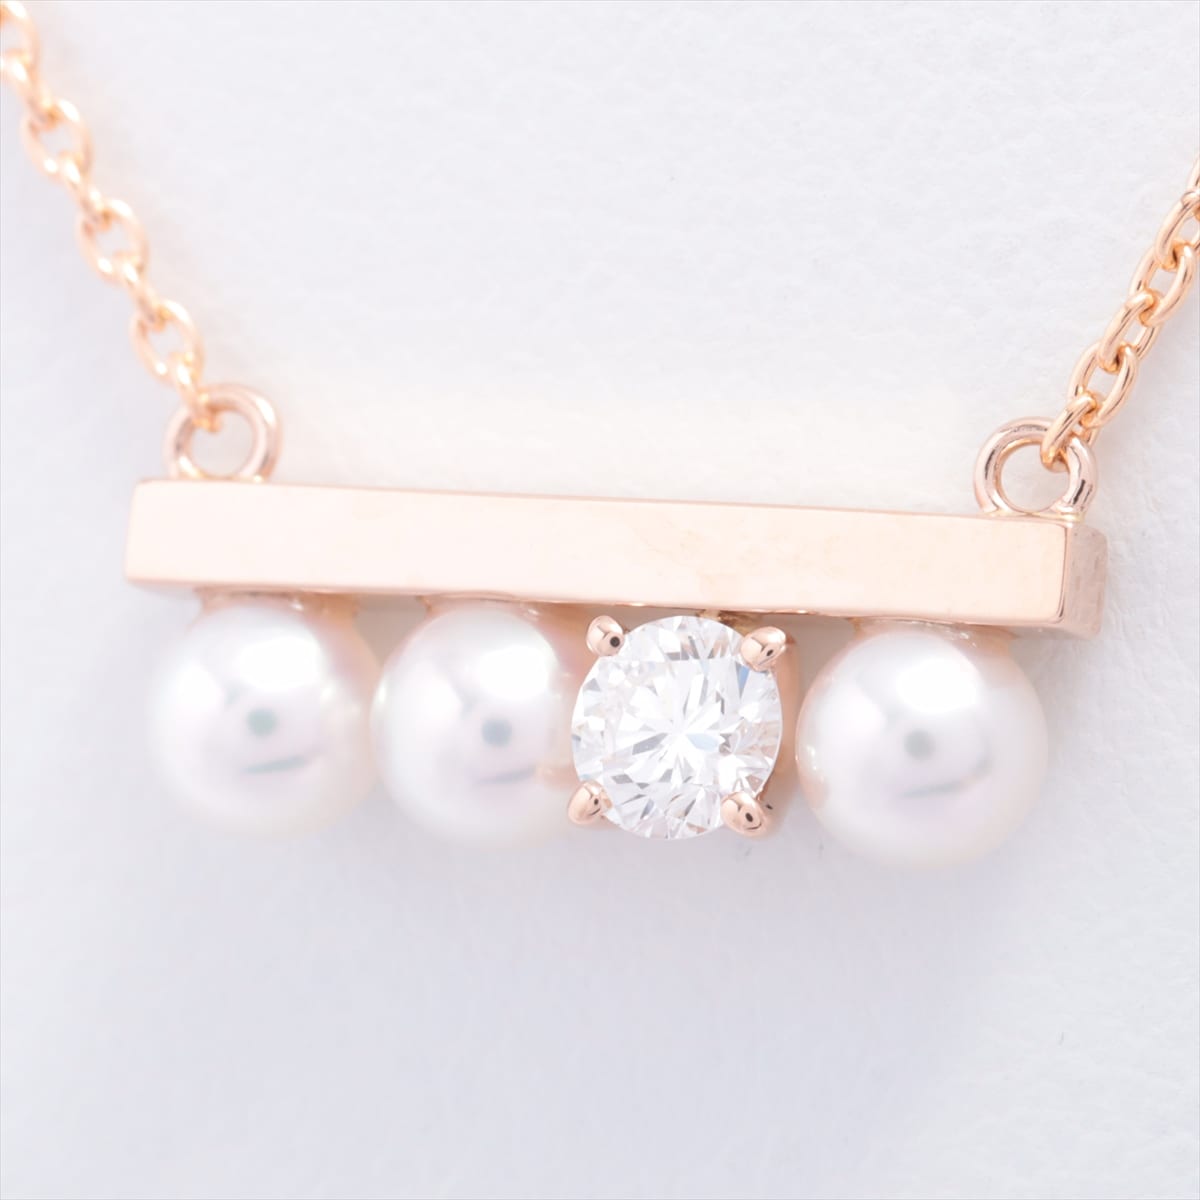 TASAKI TASAKI petits Balance Diamond Solo Necklace SG750 0.13ct